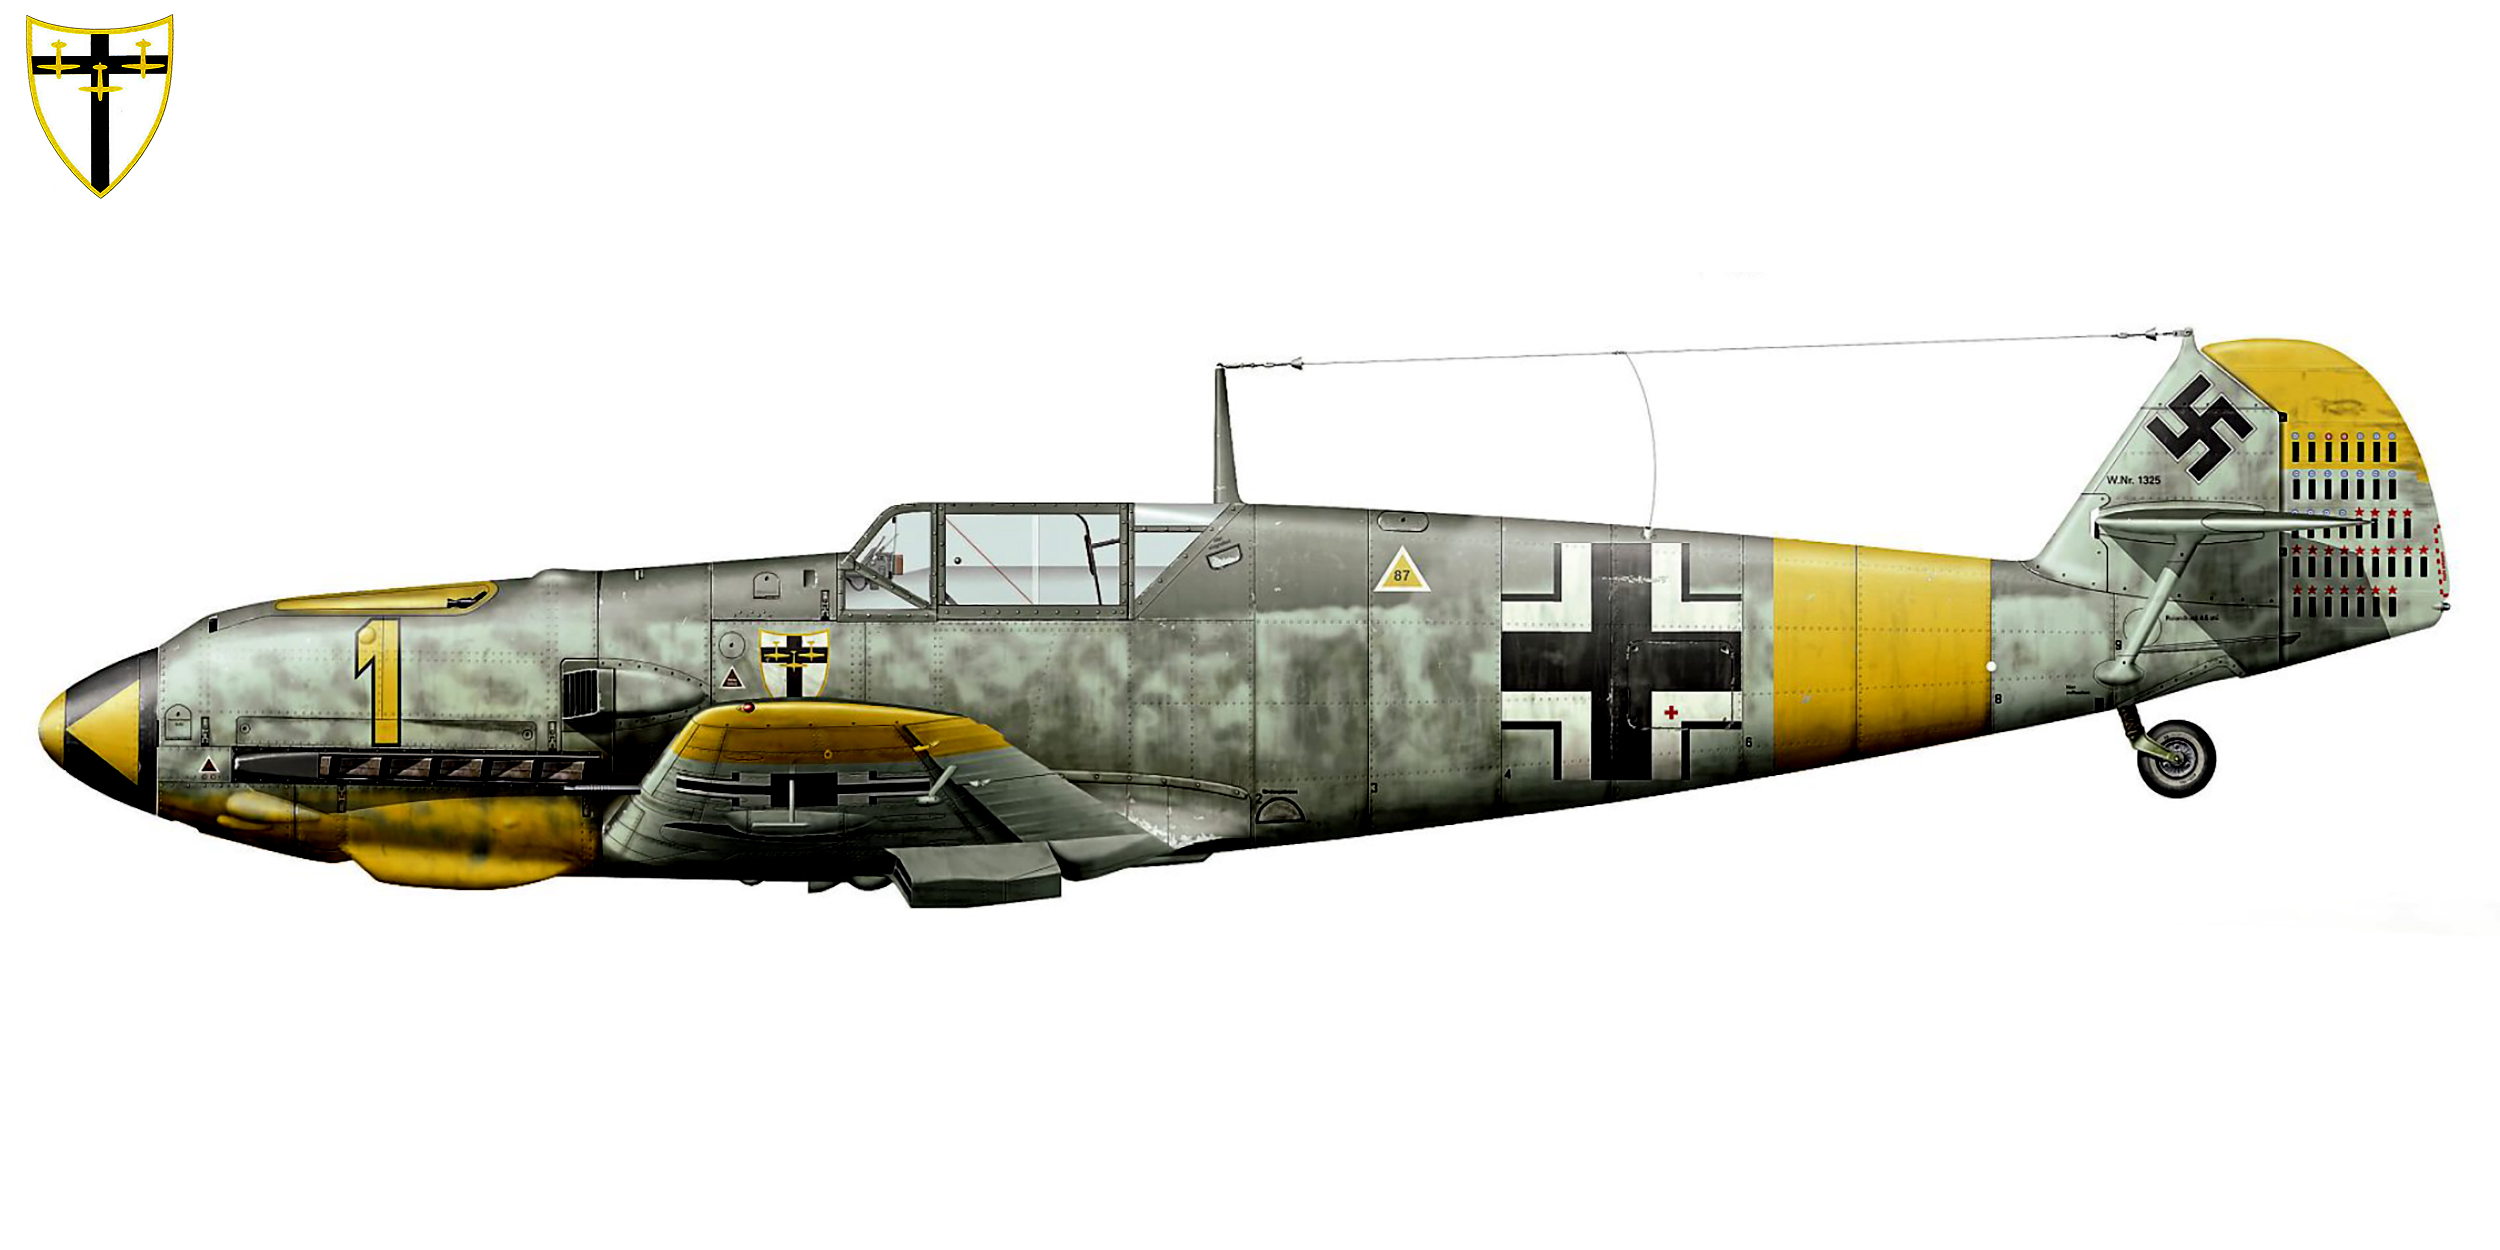 Peddinghaus 1/72 Bf 109 E-4 Markings Erbo Graf von Kageneck 9./JG 27 Sicily 1774